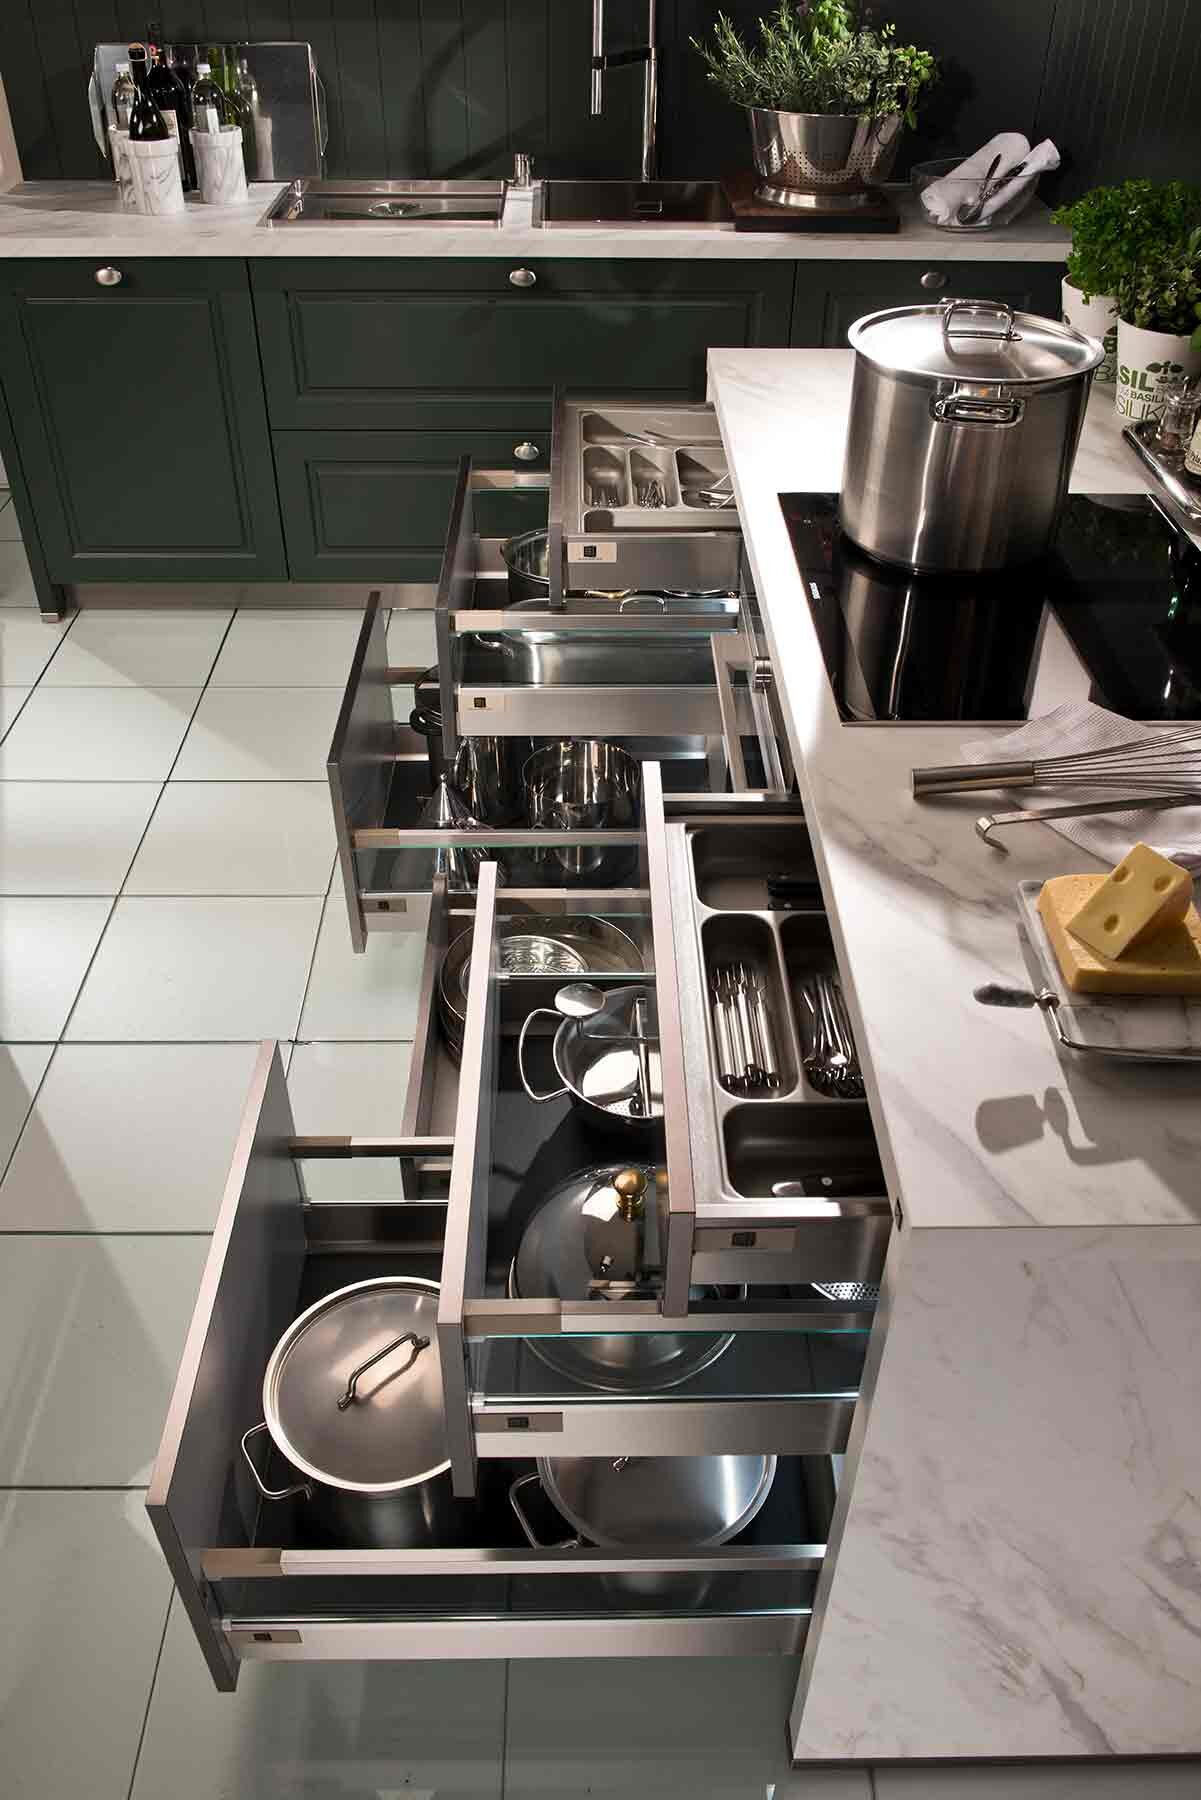 Enjoy modern kitchen style like these remodeled drawers.